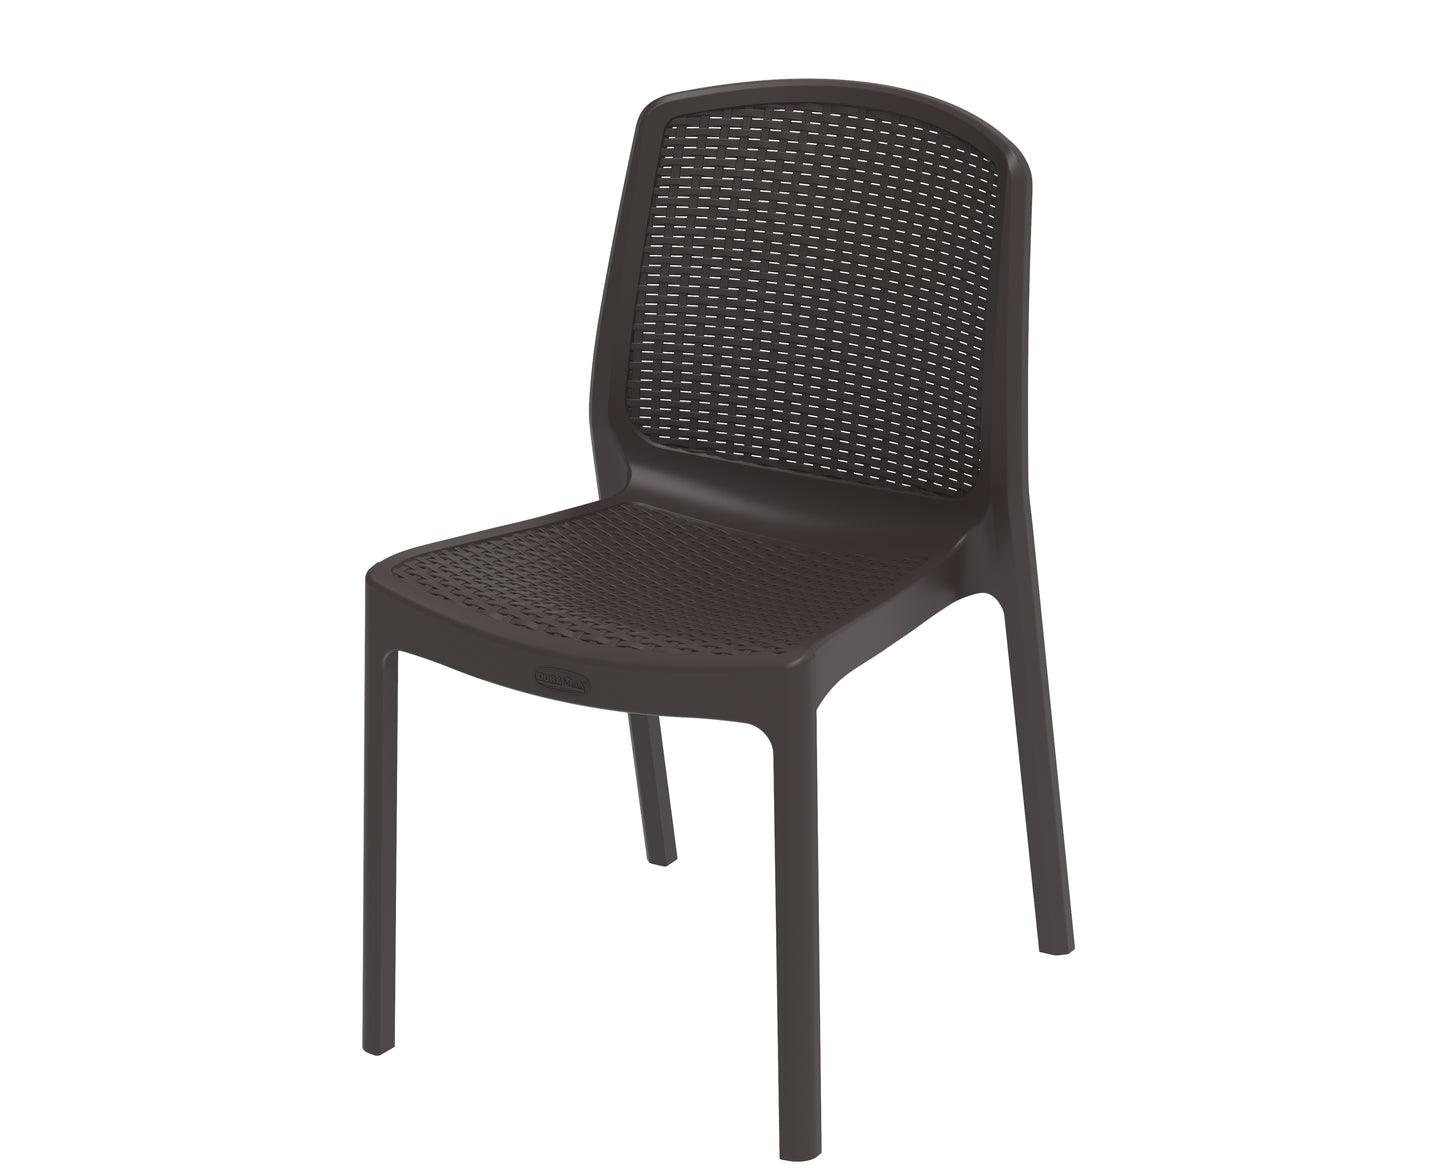 Duramax Rattan Patio Chair (2 Color Options)